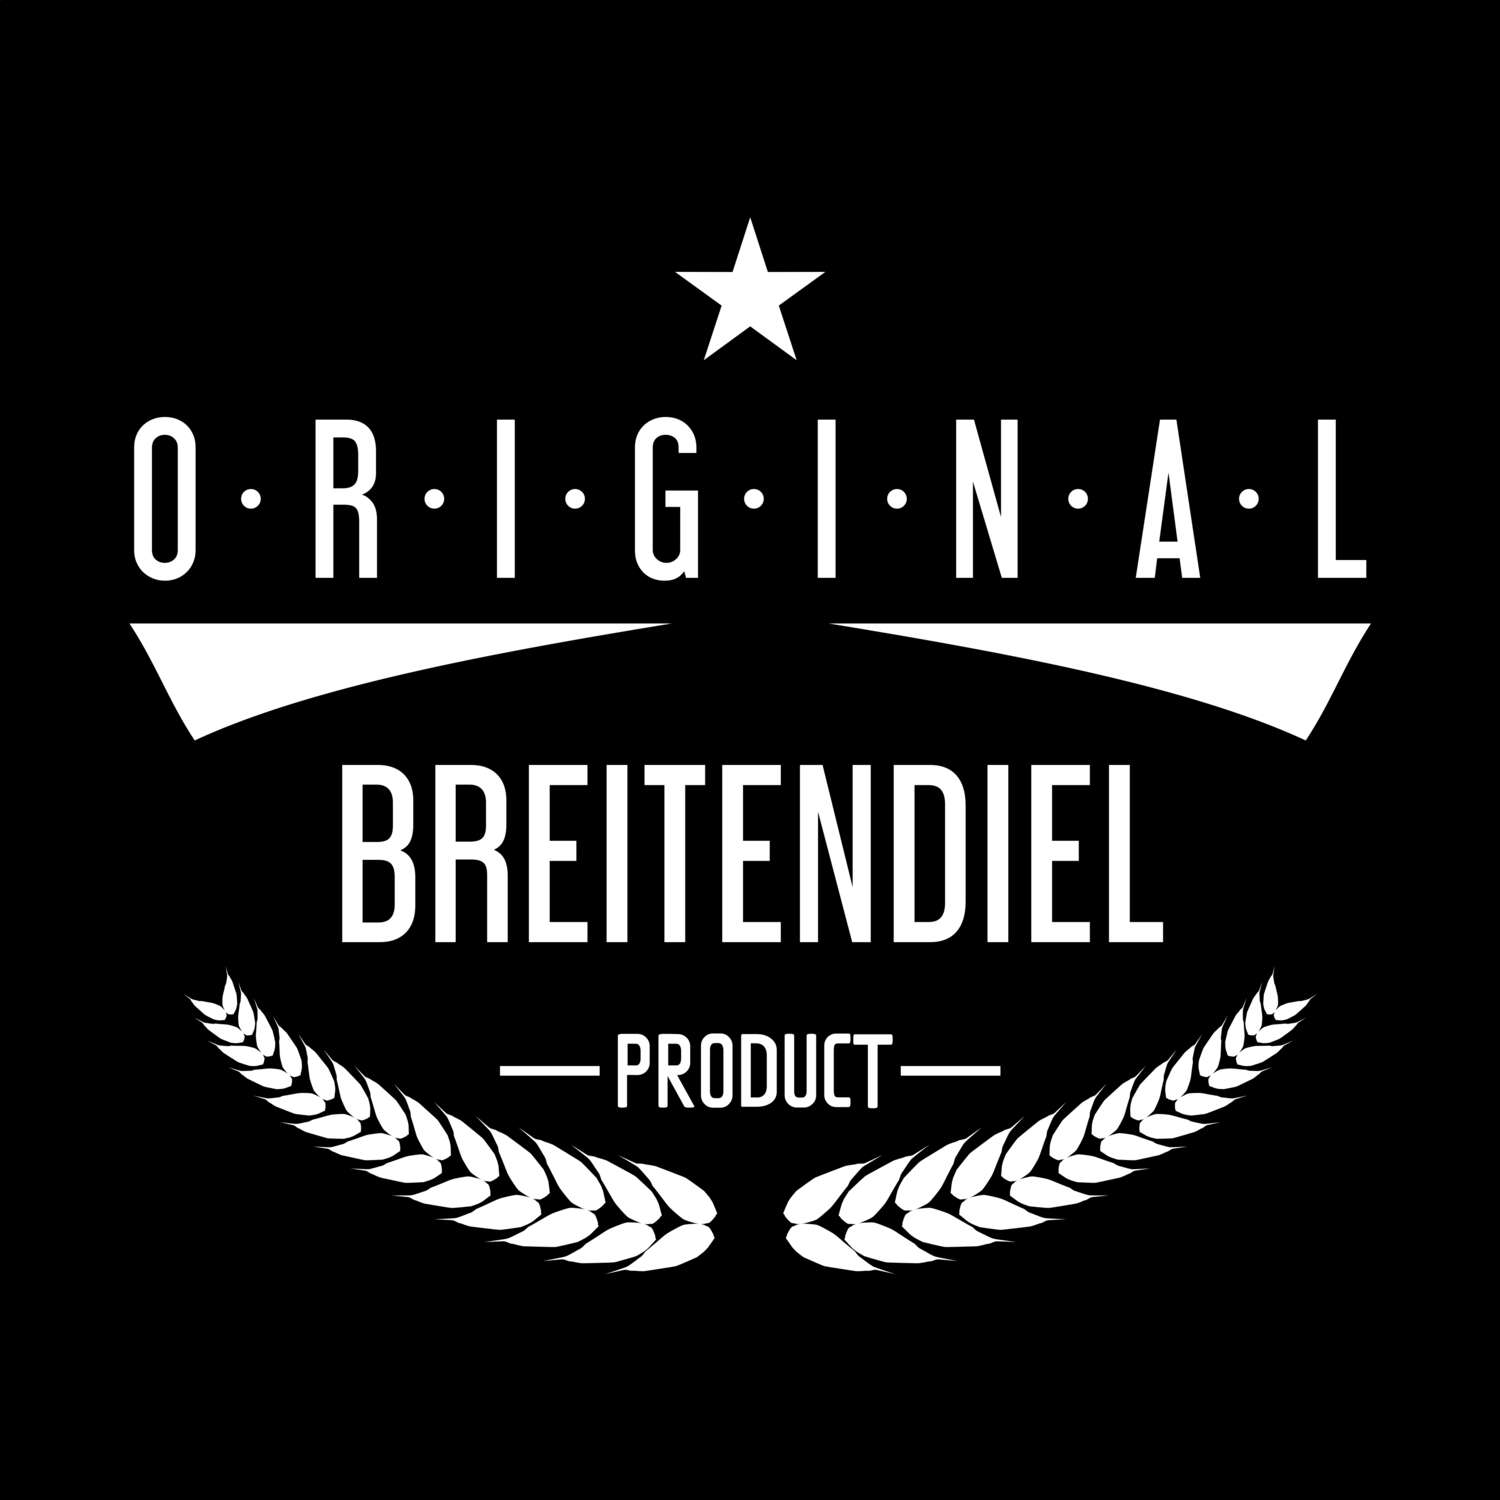 Breitendiel T-Shirt »Original Product«